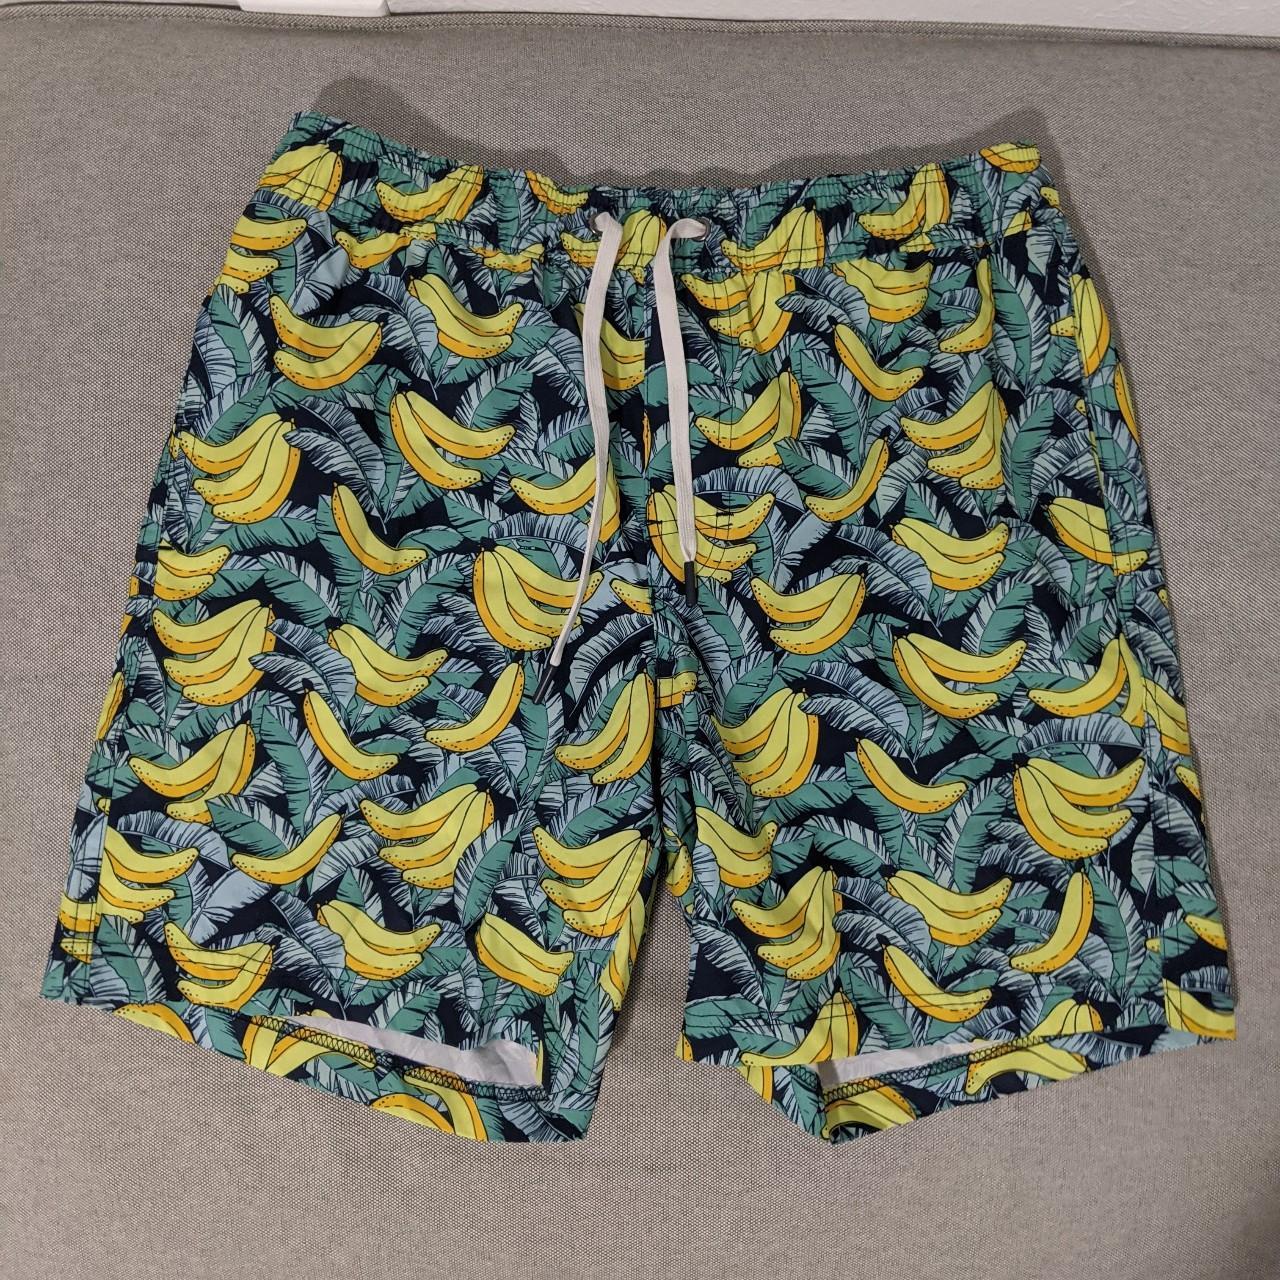 Banana swim trunks size M - Depop